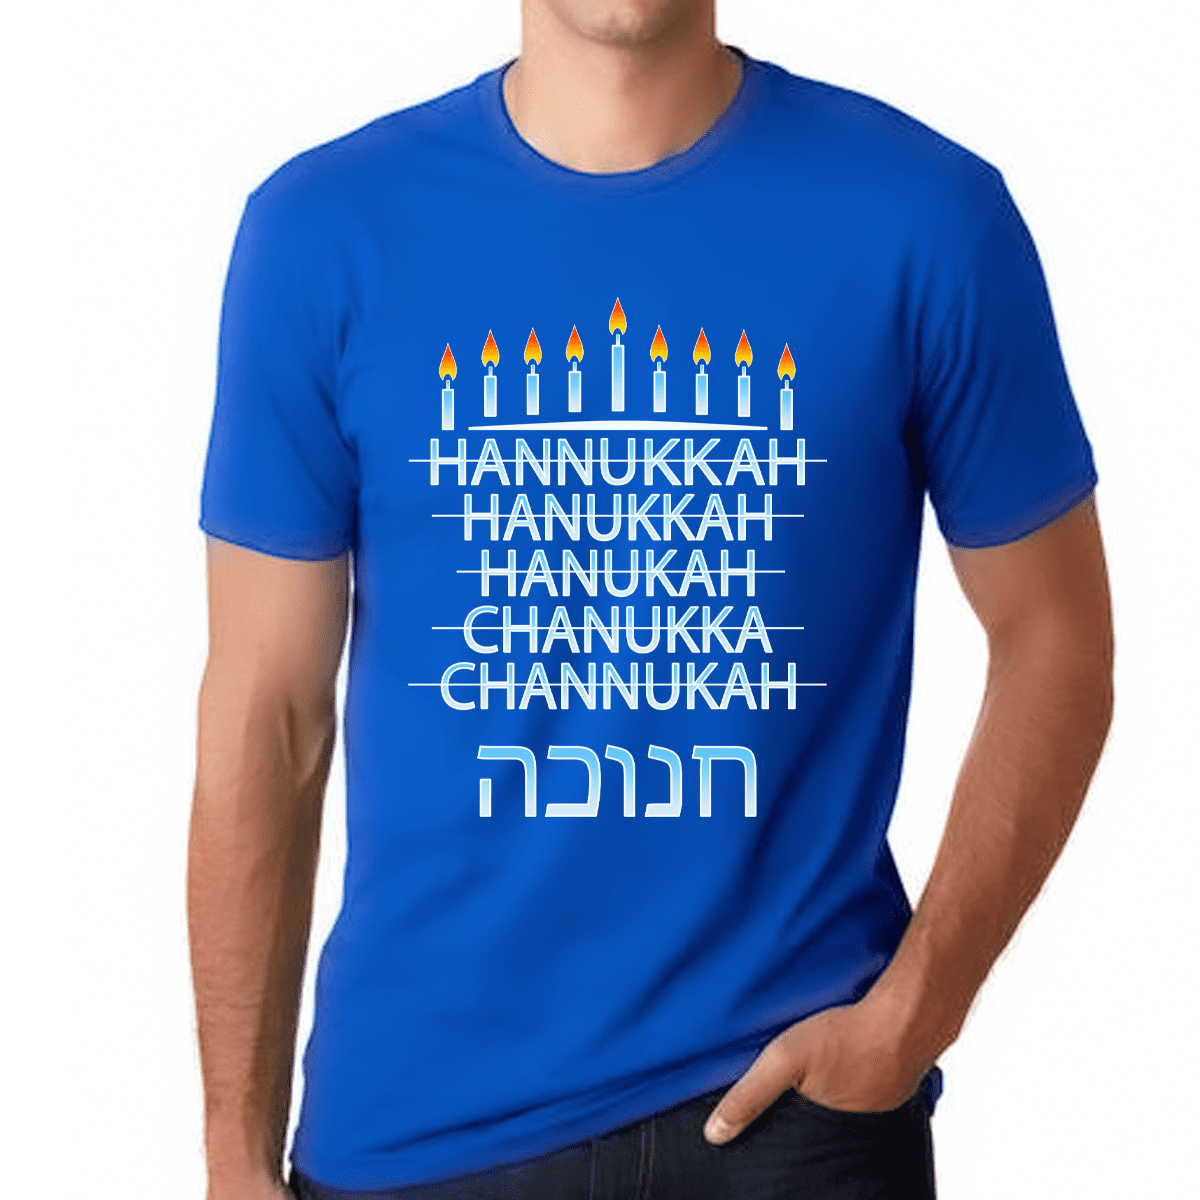 Hanukkah Shirts for Men - Funny Jewish Shirt - Jewish Shirts for Men -  